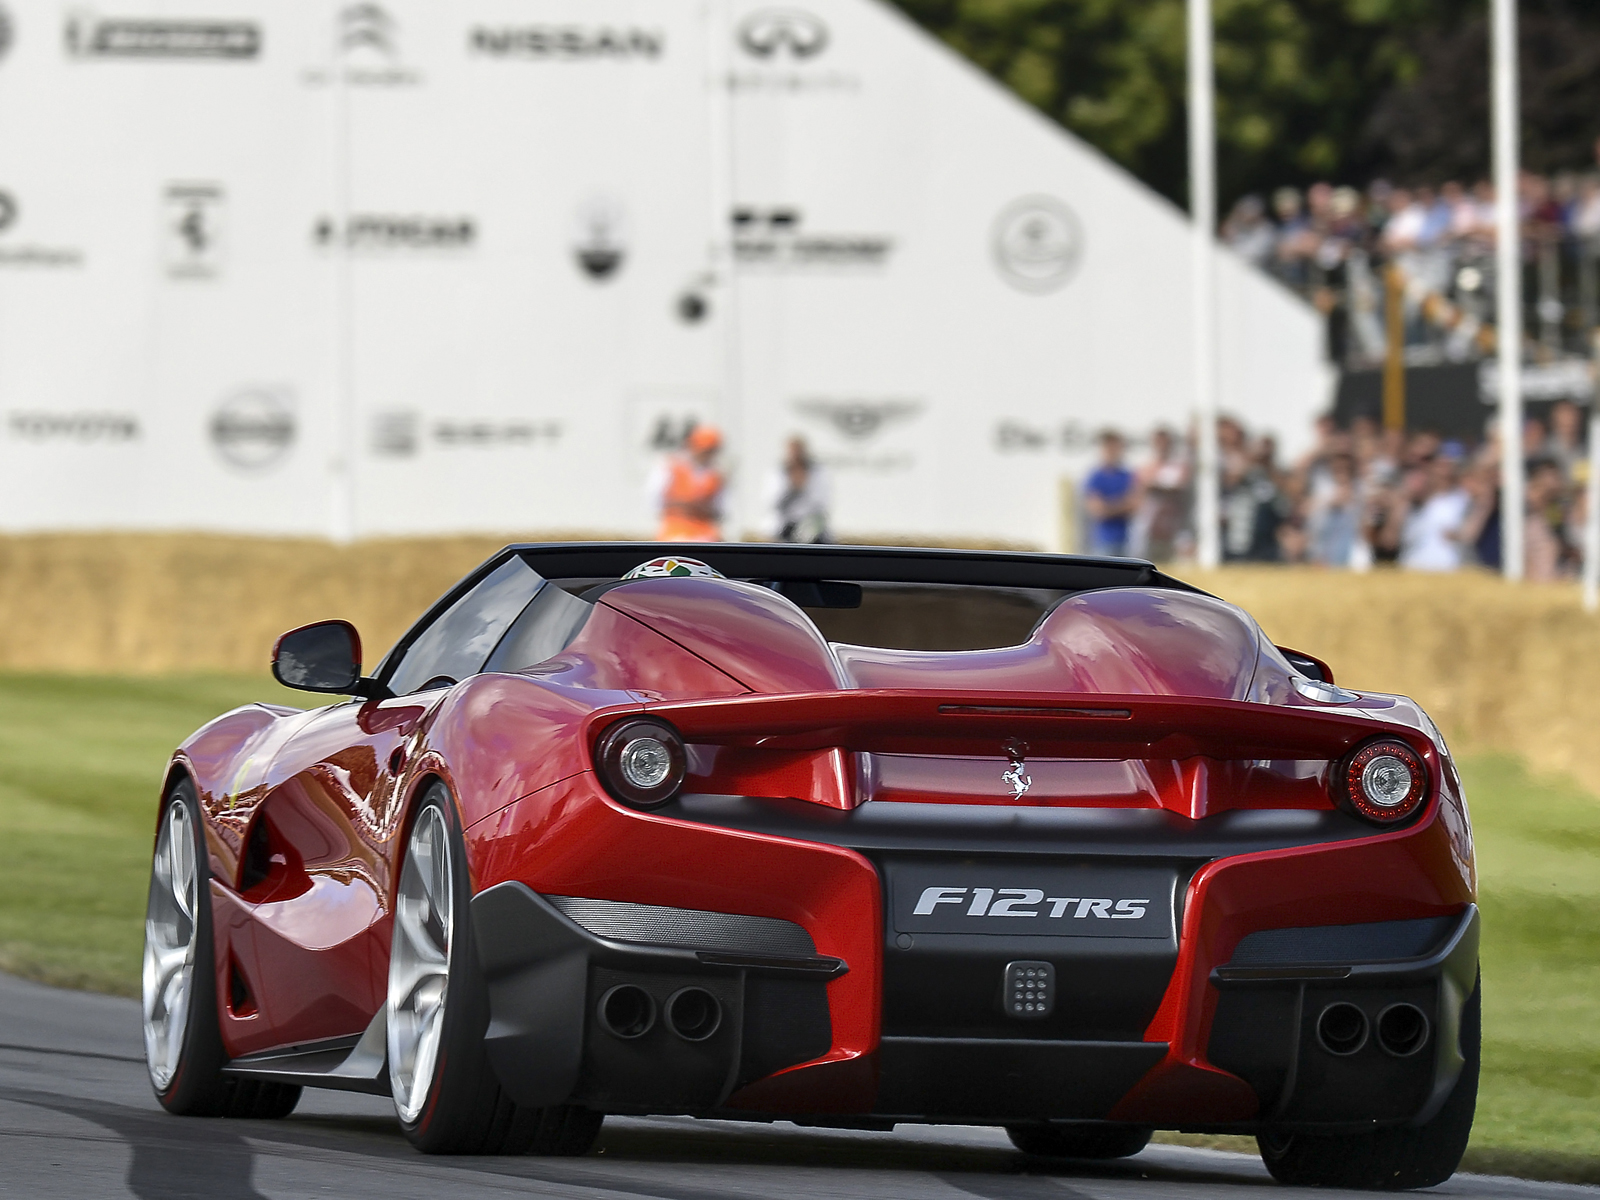 Télécharger des fonds d'écran Ferrari F12 Trs HD